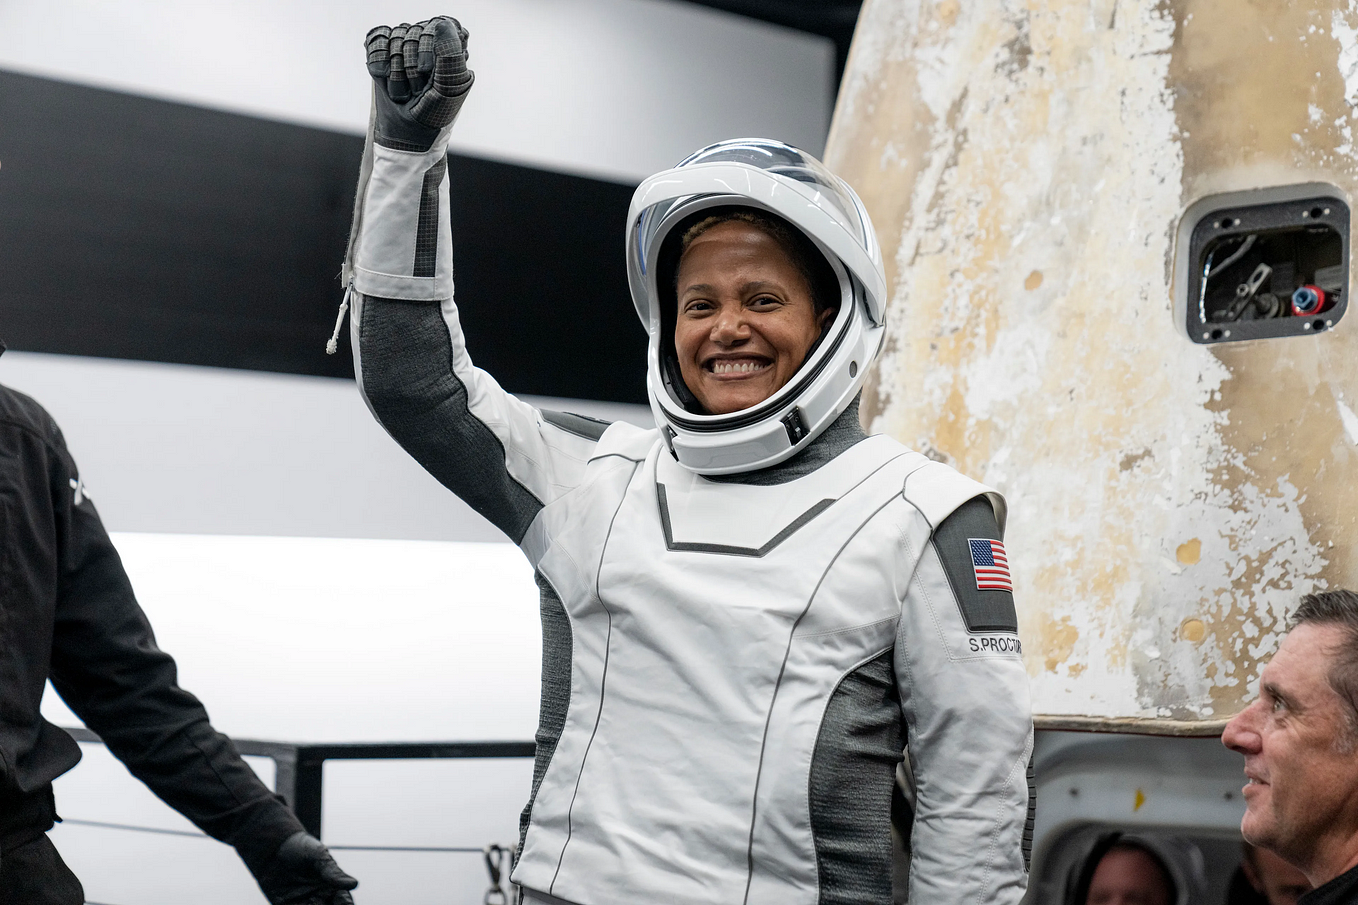 Black, Female, and Astronaut